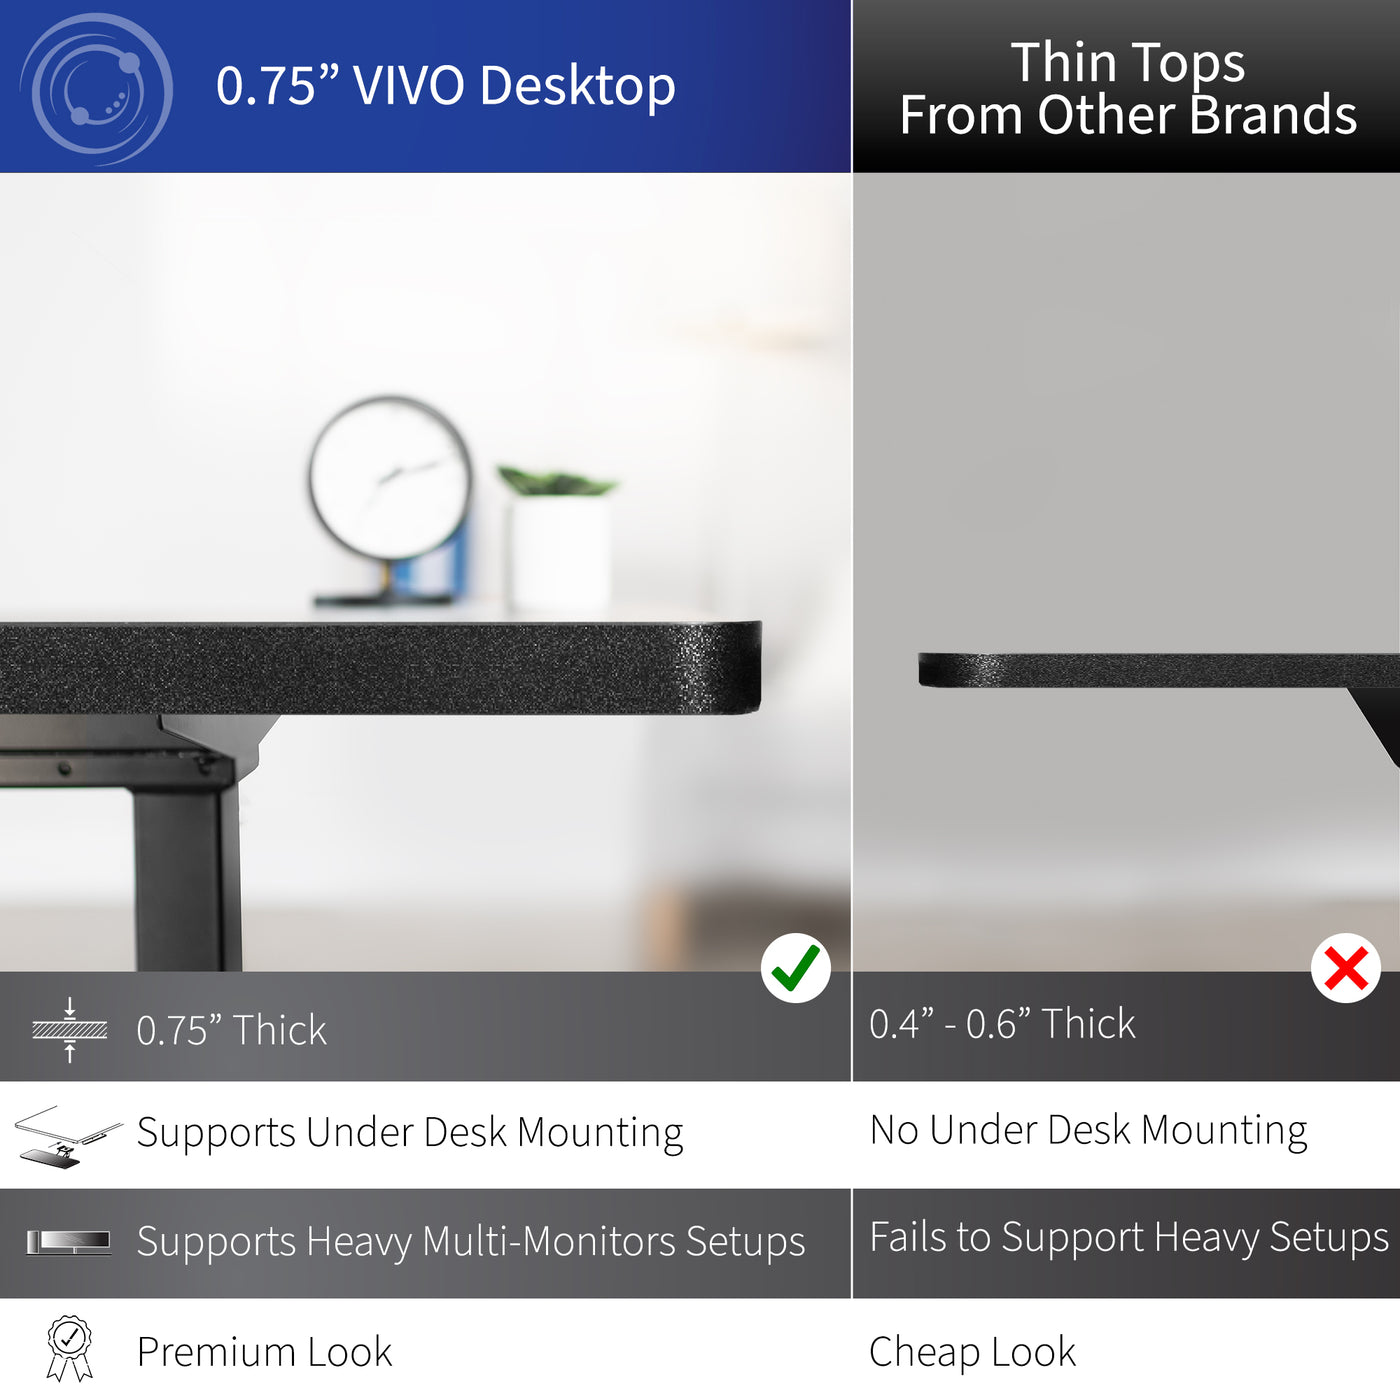 Premium VIVO desktop compared to other thin desktops on the market.